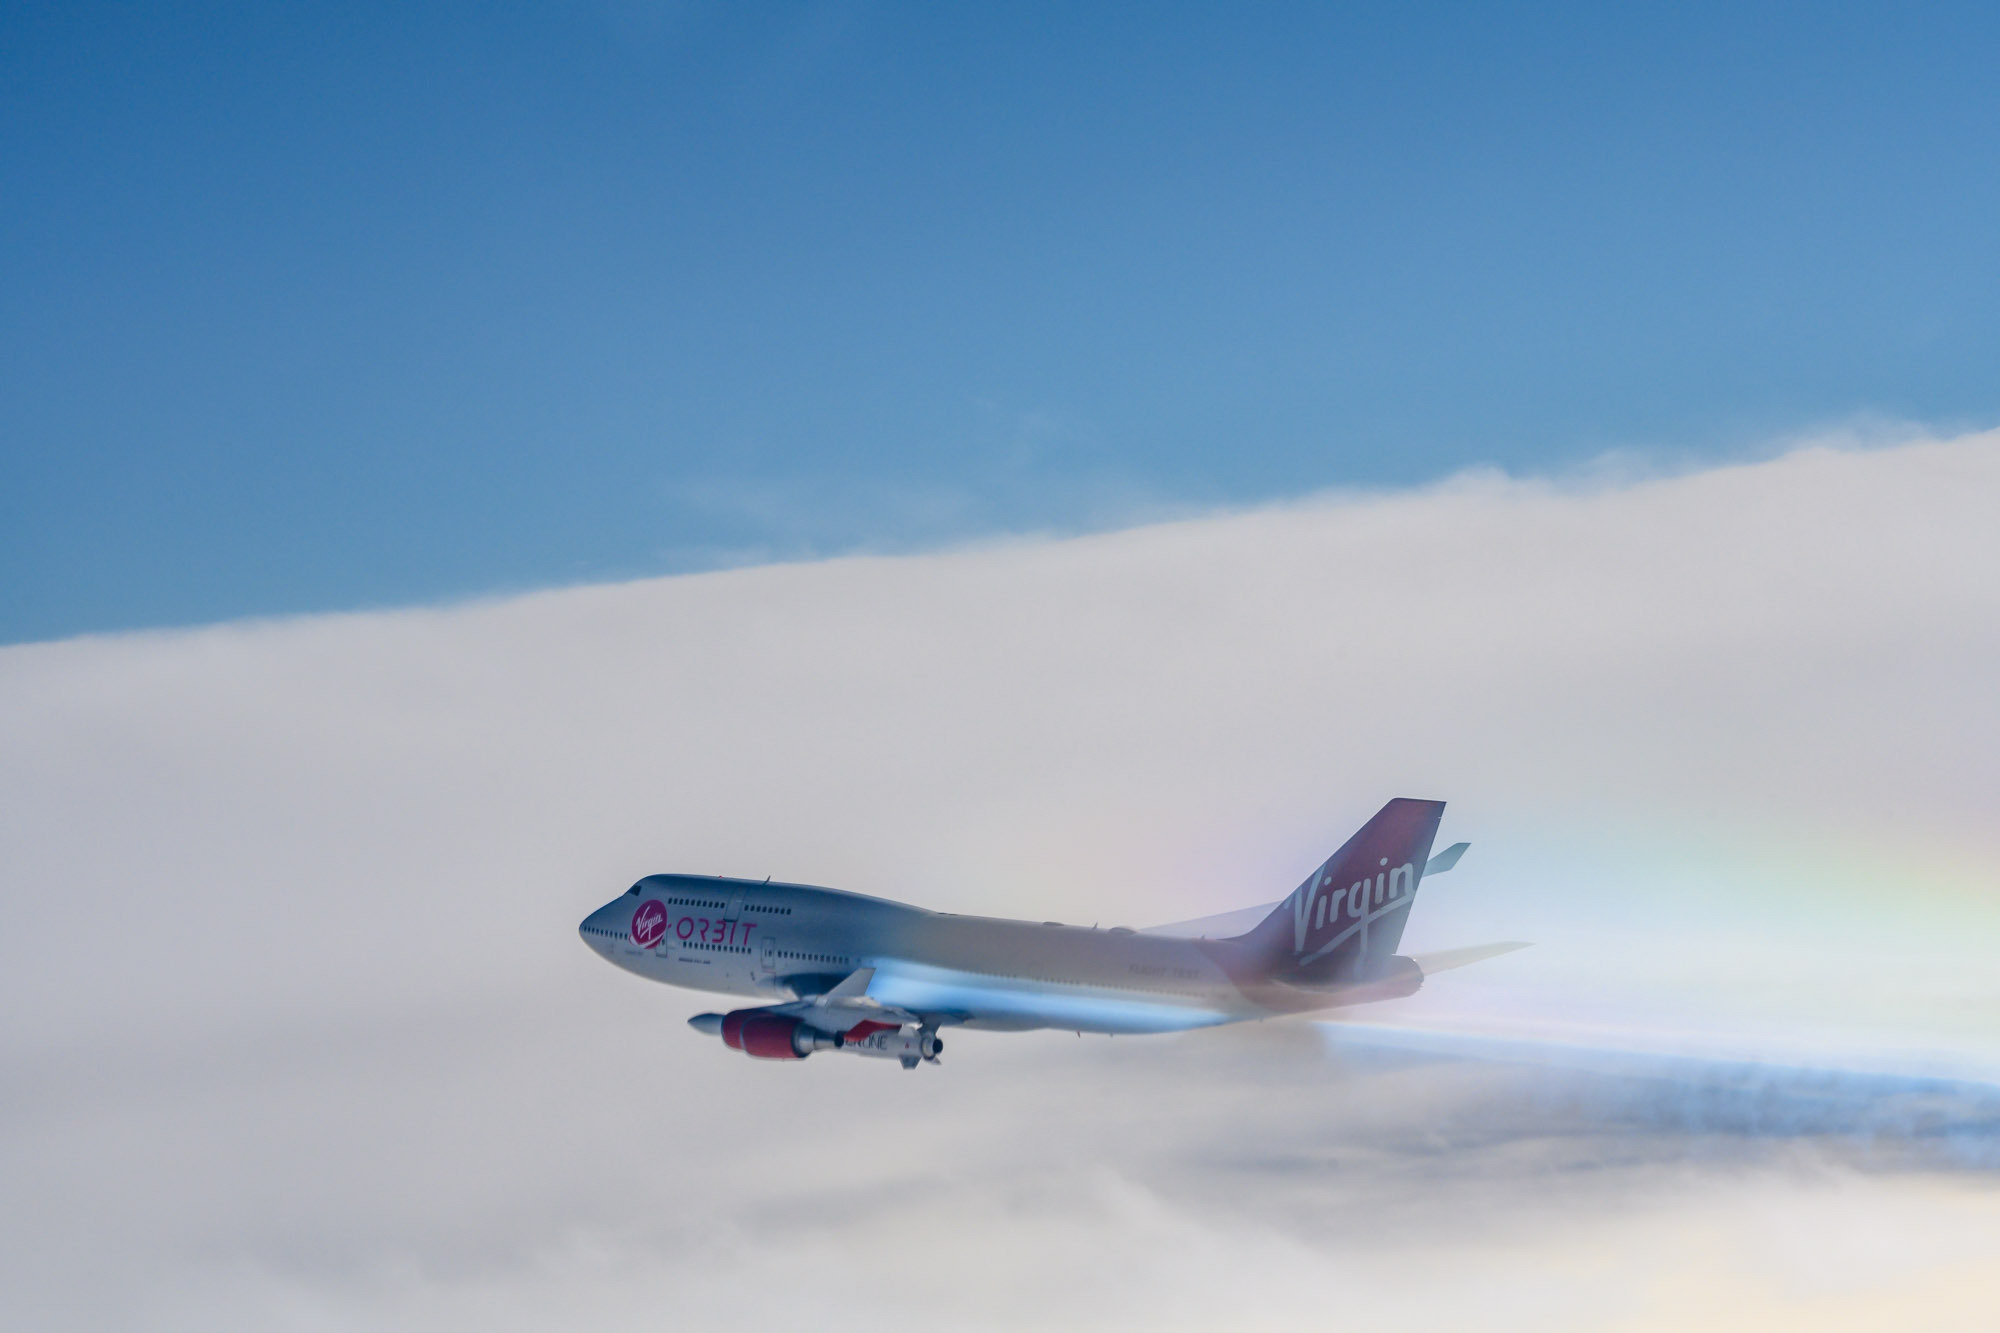 Virgin Orbit Boeing aircraft flying through clouds.